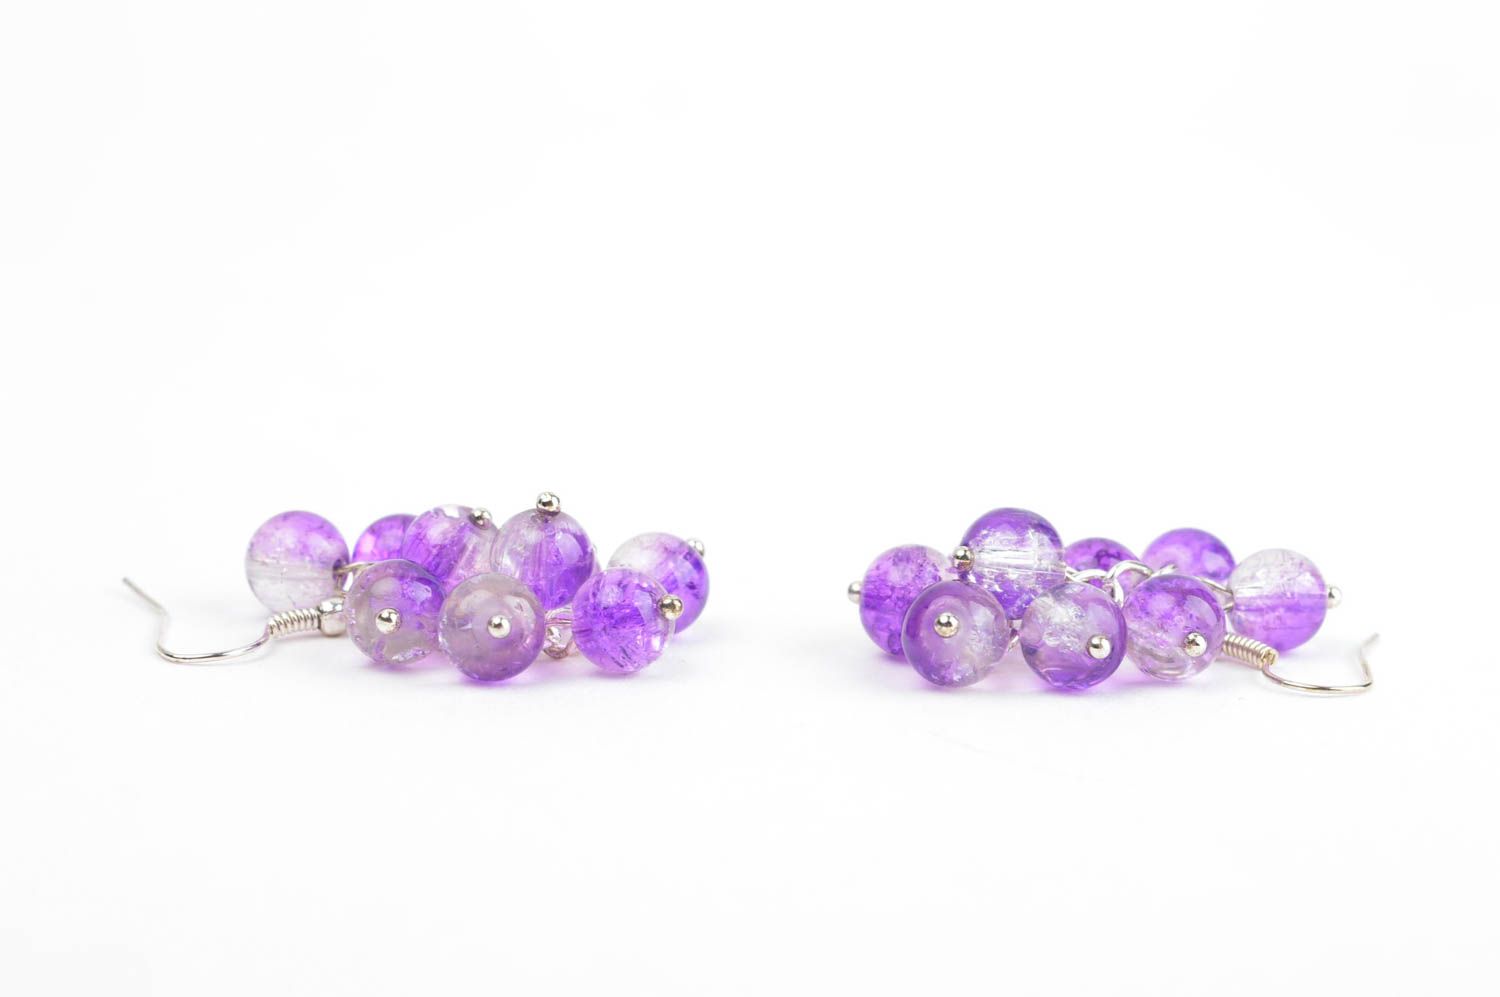 Handmade earrings designer accessory gift ideas unusual jewelry beads earrings photo 2